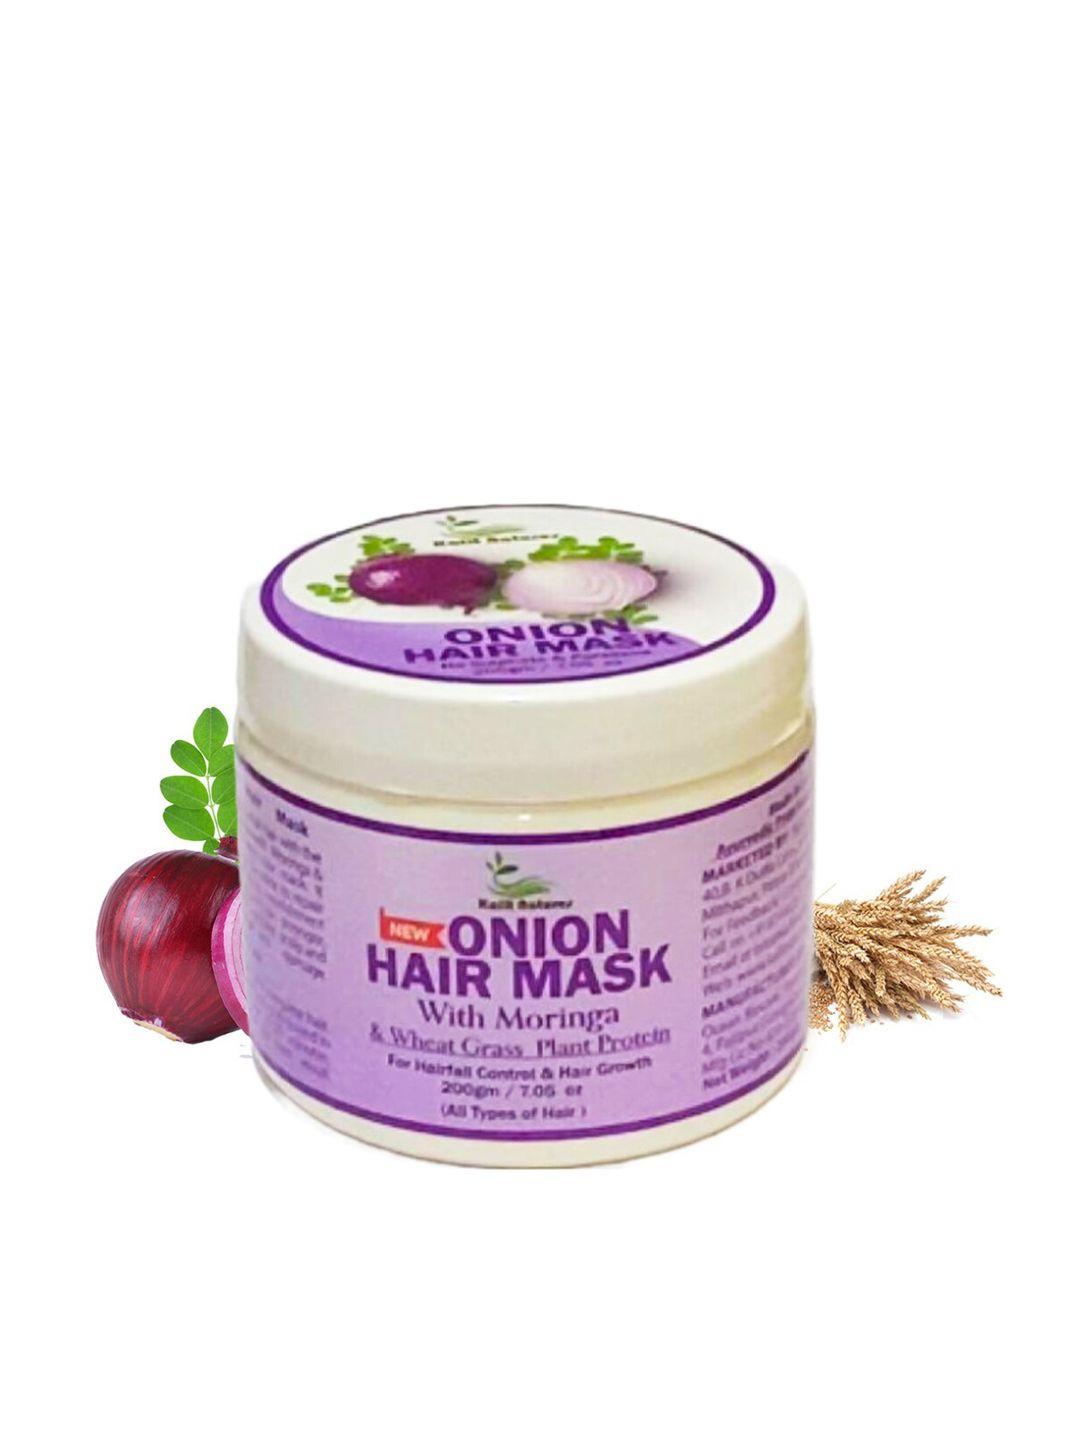 kalit natures onion hair mask with moringa & wheat grass - 200 gm each